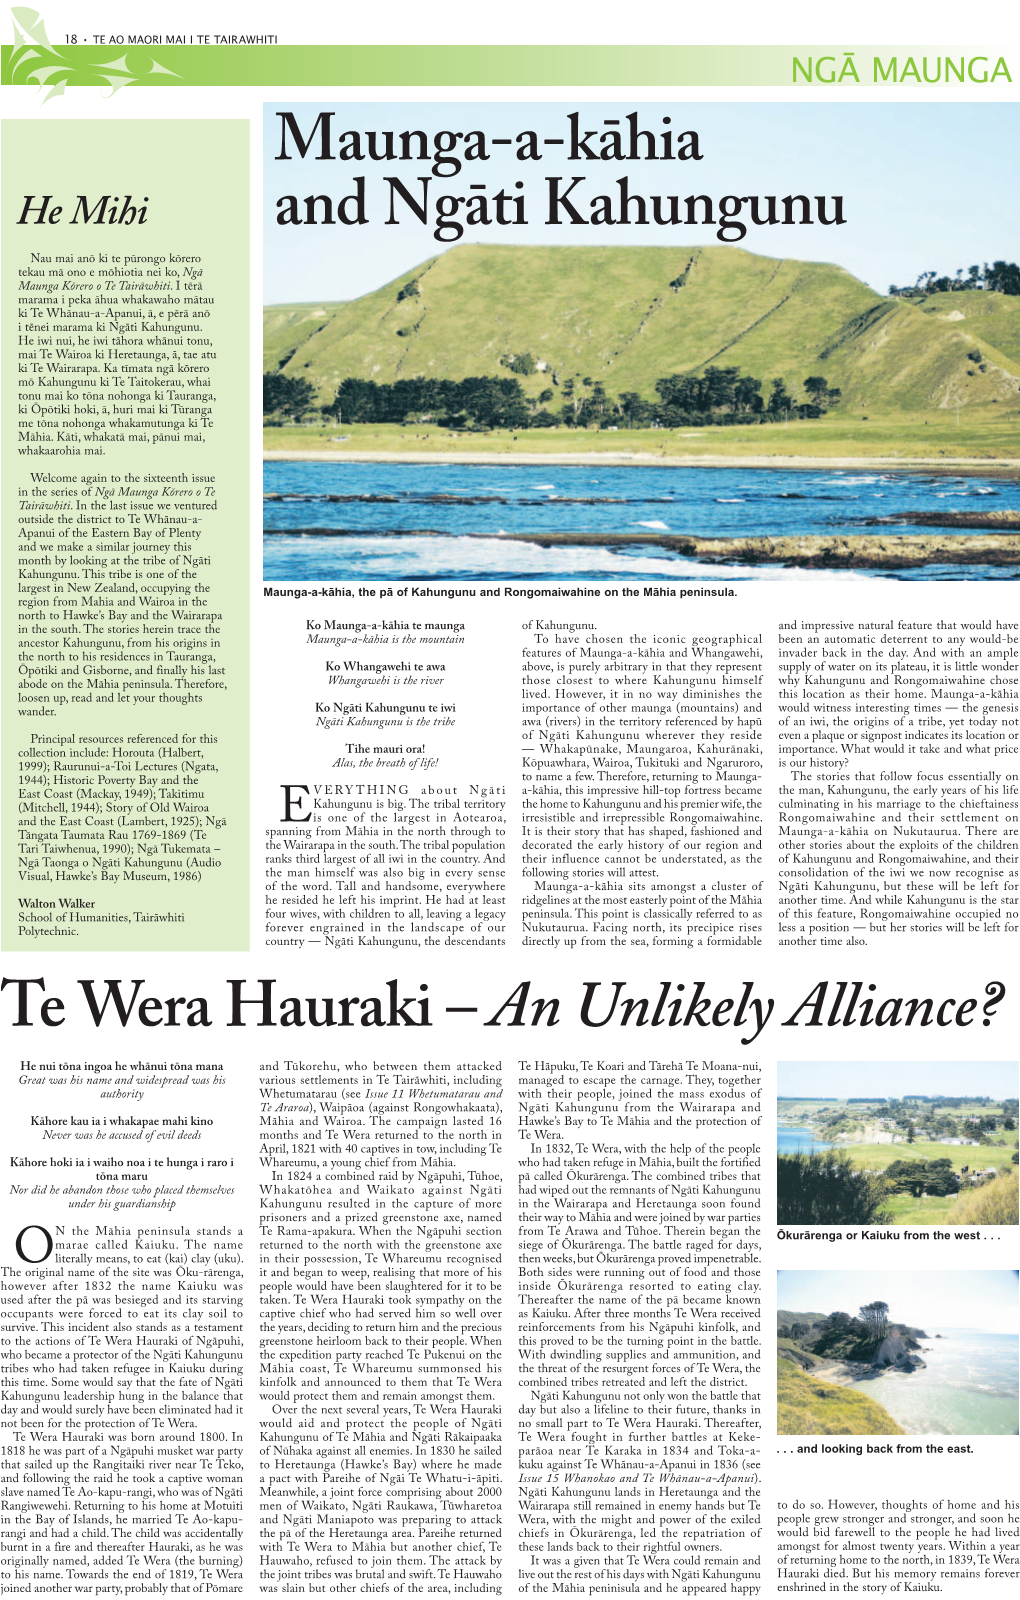 Te Wera Hauraki – an Unlikely Alliance?